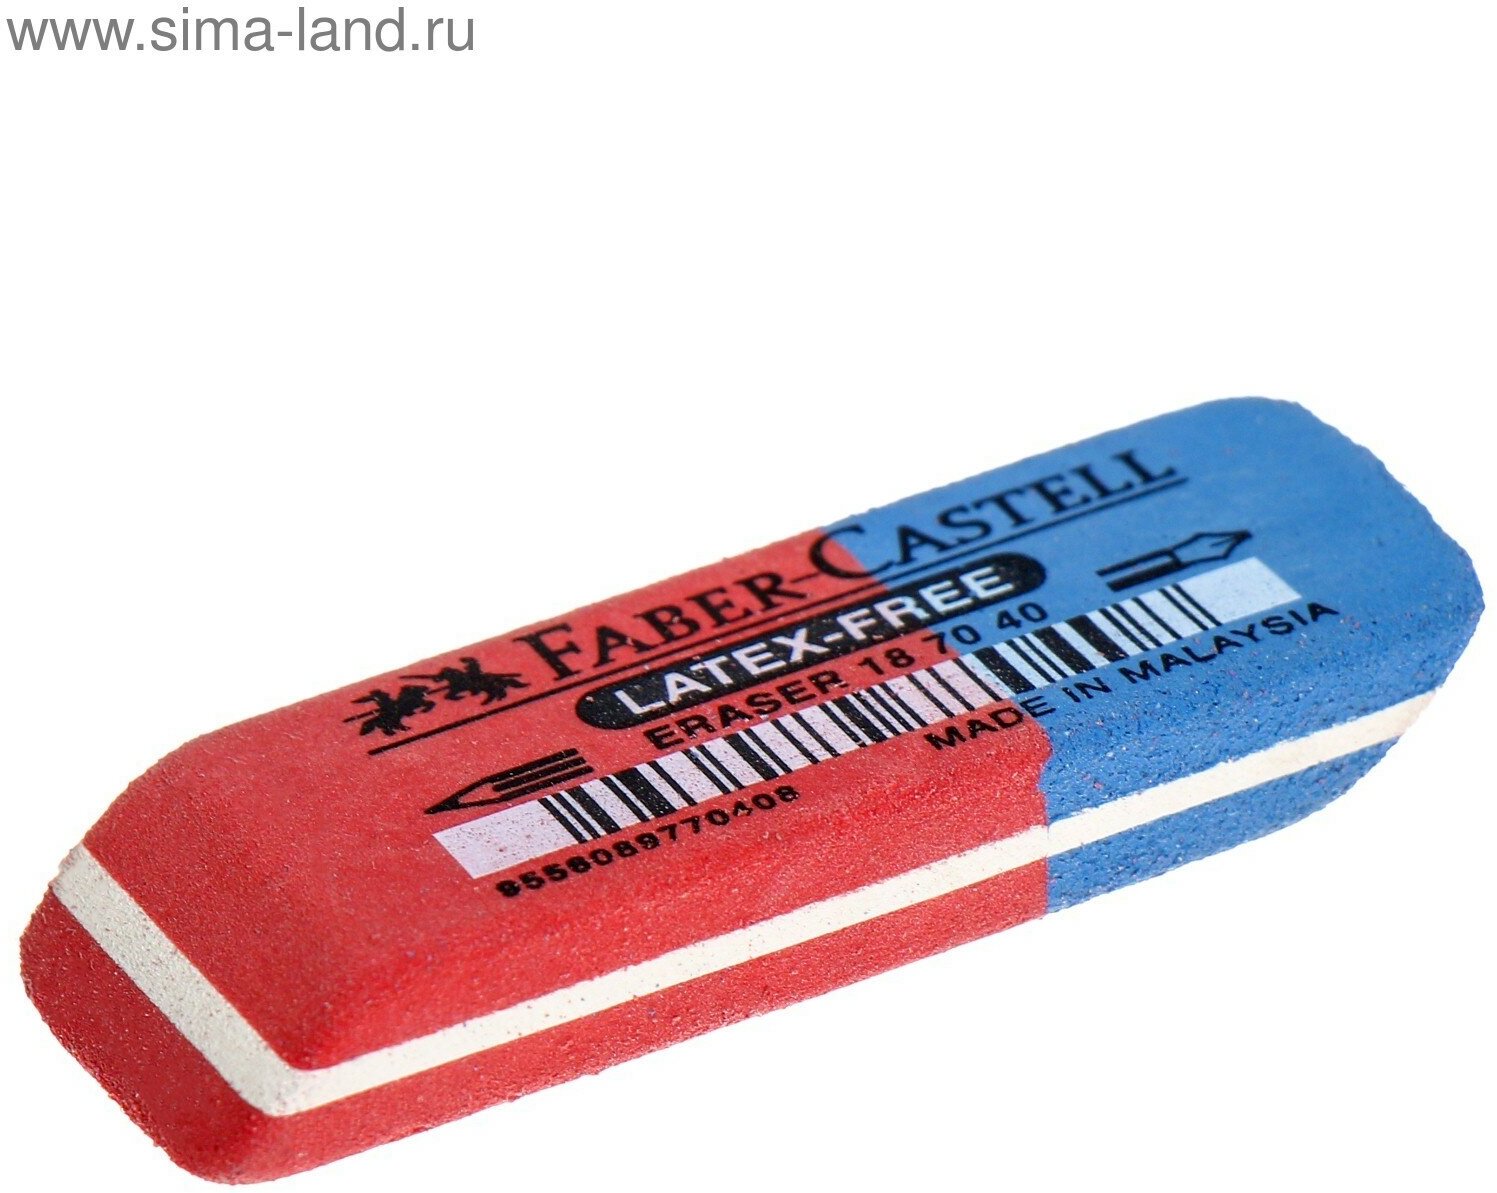 Ластик каучук 7070, 50 х 18 х 8, двухсторонний для карандашей и чернил, красно-синий